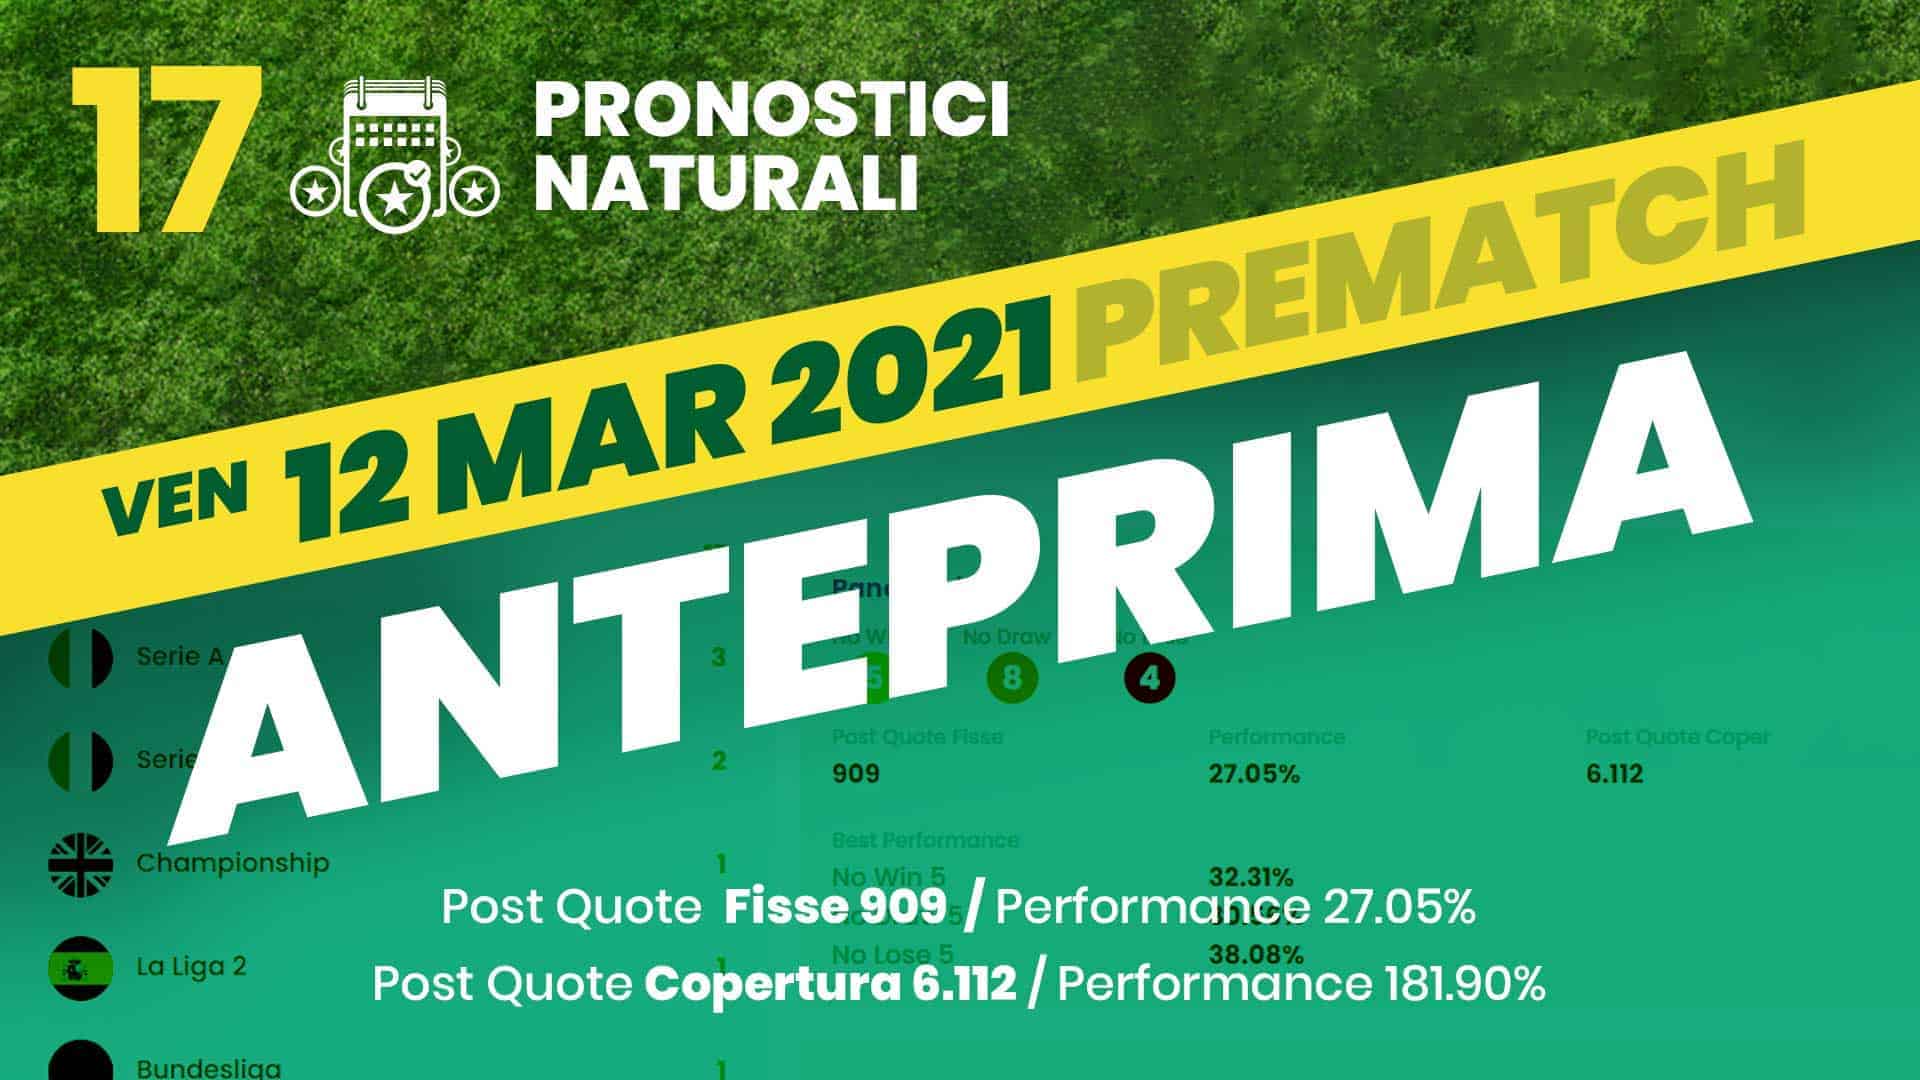 Pronostici Naturali Anteprima Scommesse Betting Calcio Partite Venerdì 12 Marzo 2021